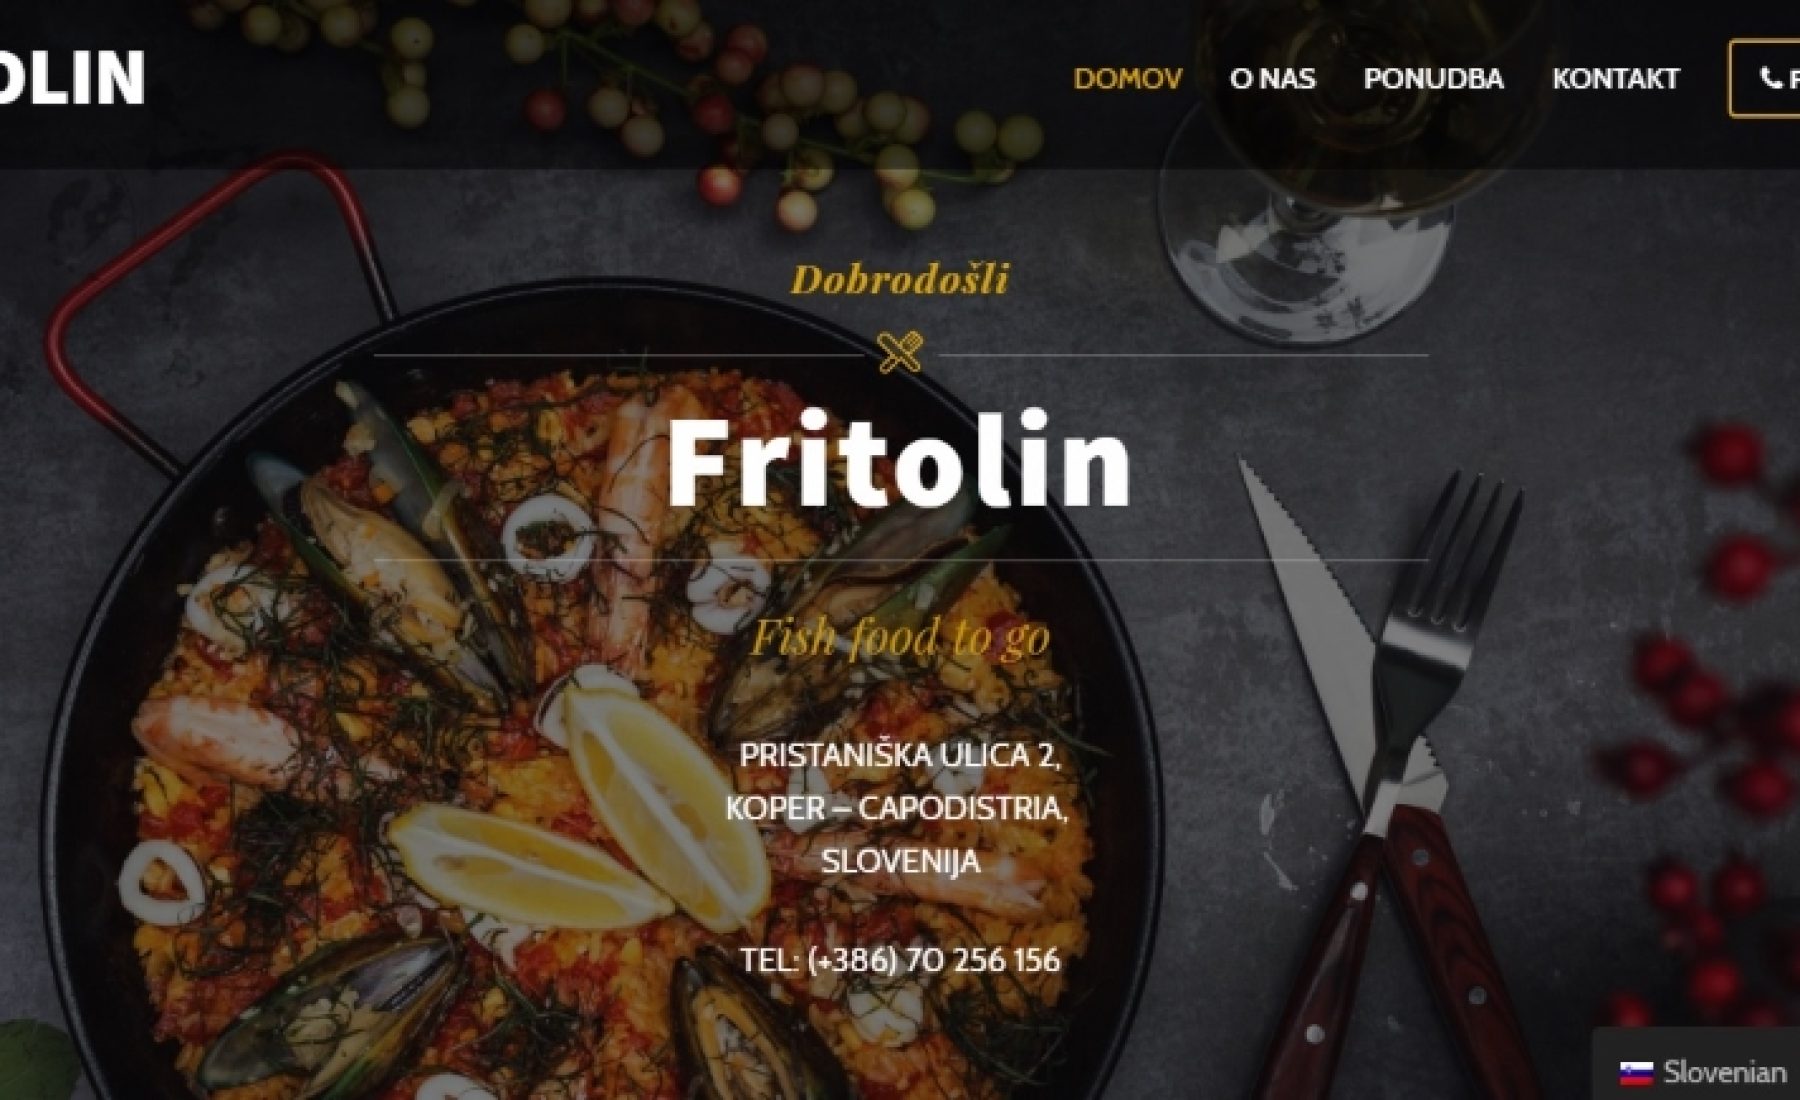 Fritolin - Fast fish food restaurant